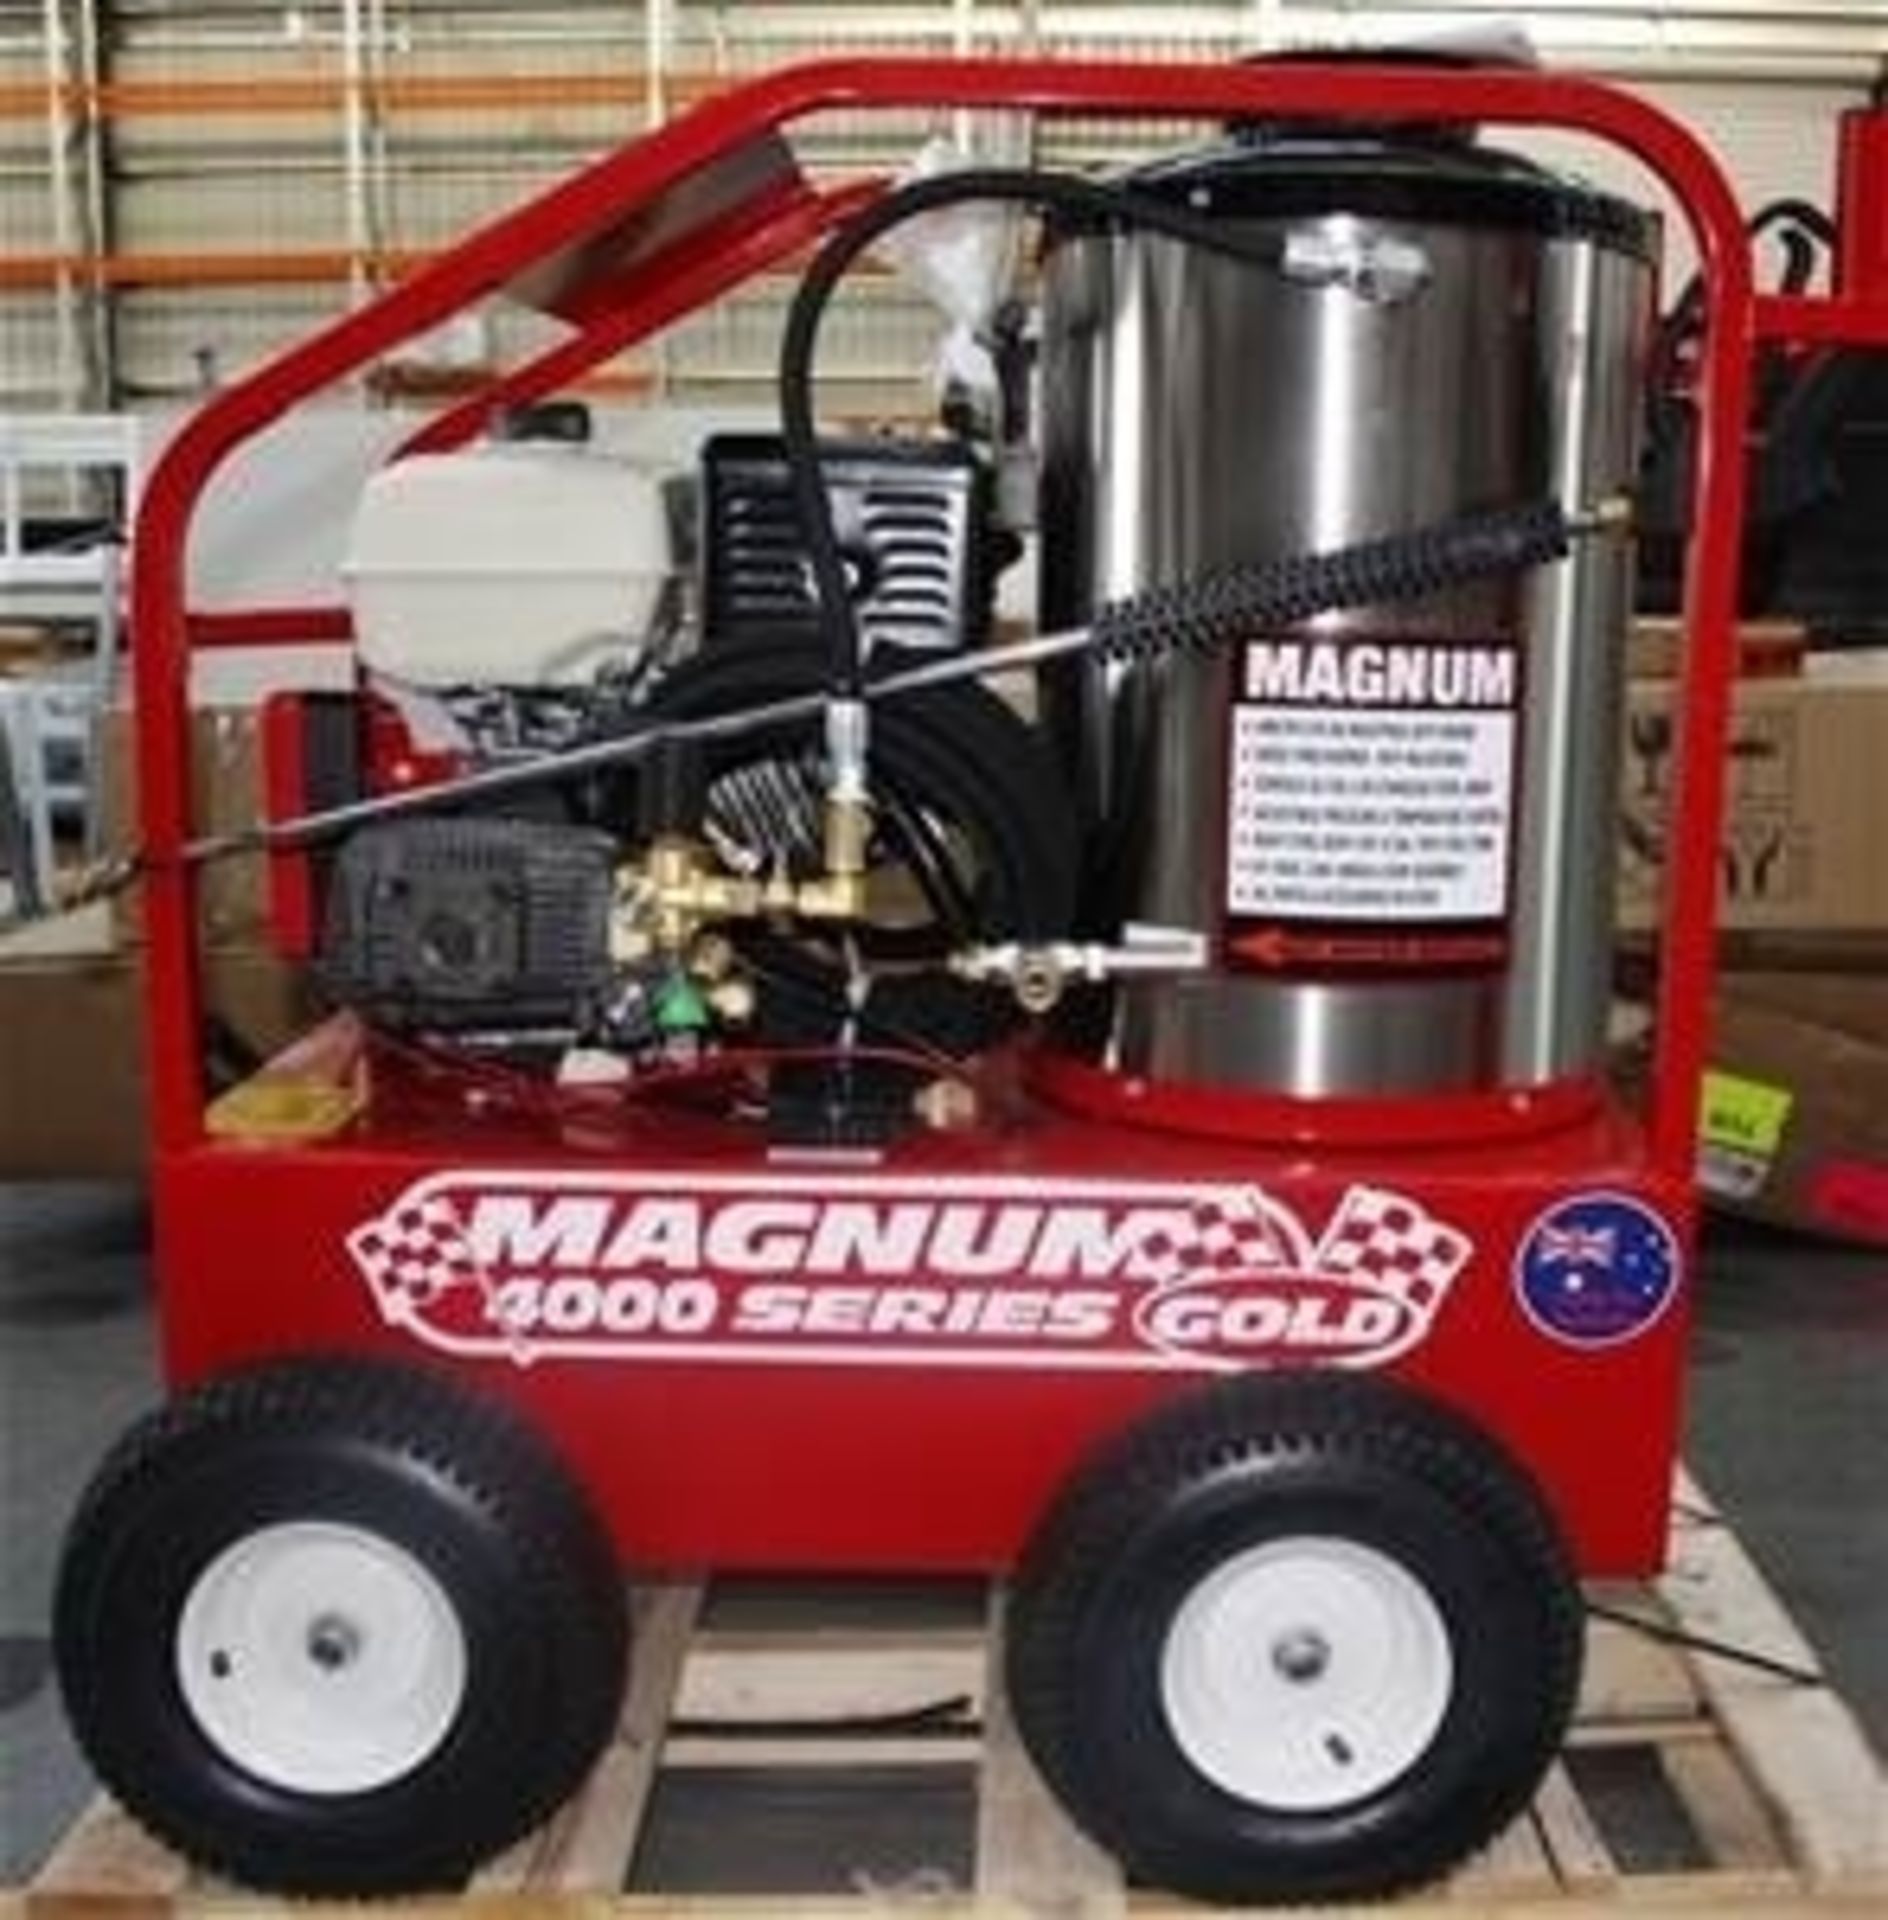 Magnum 4000 Series Gold Diesel Fired